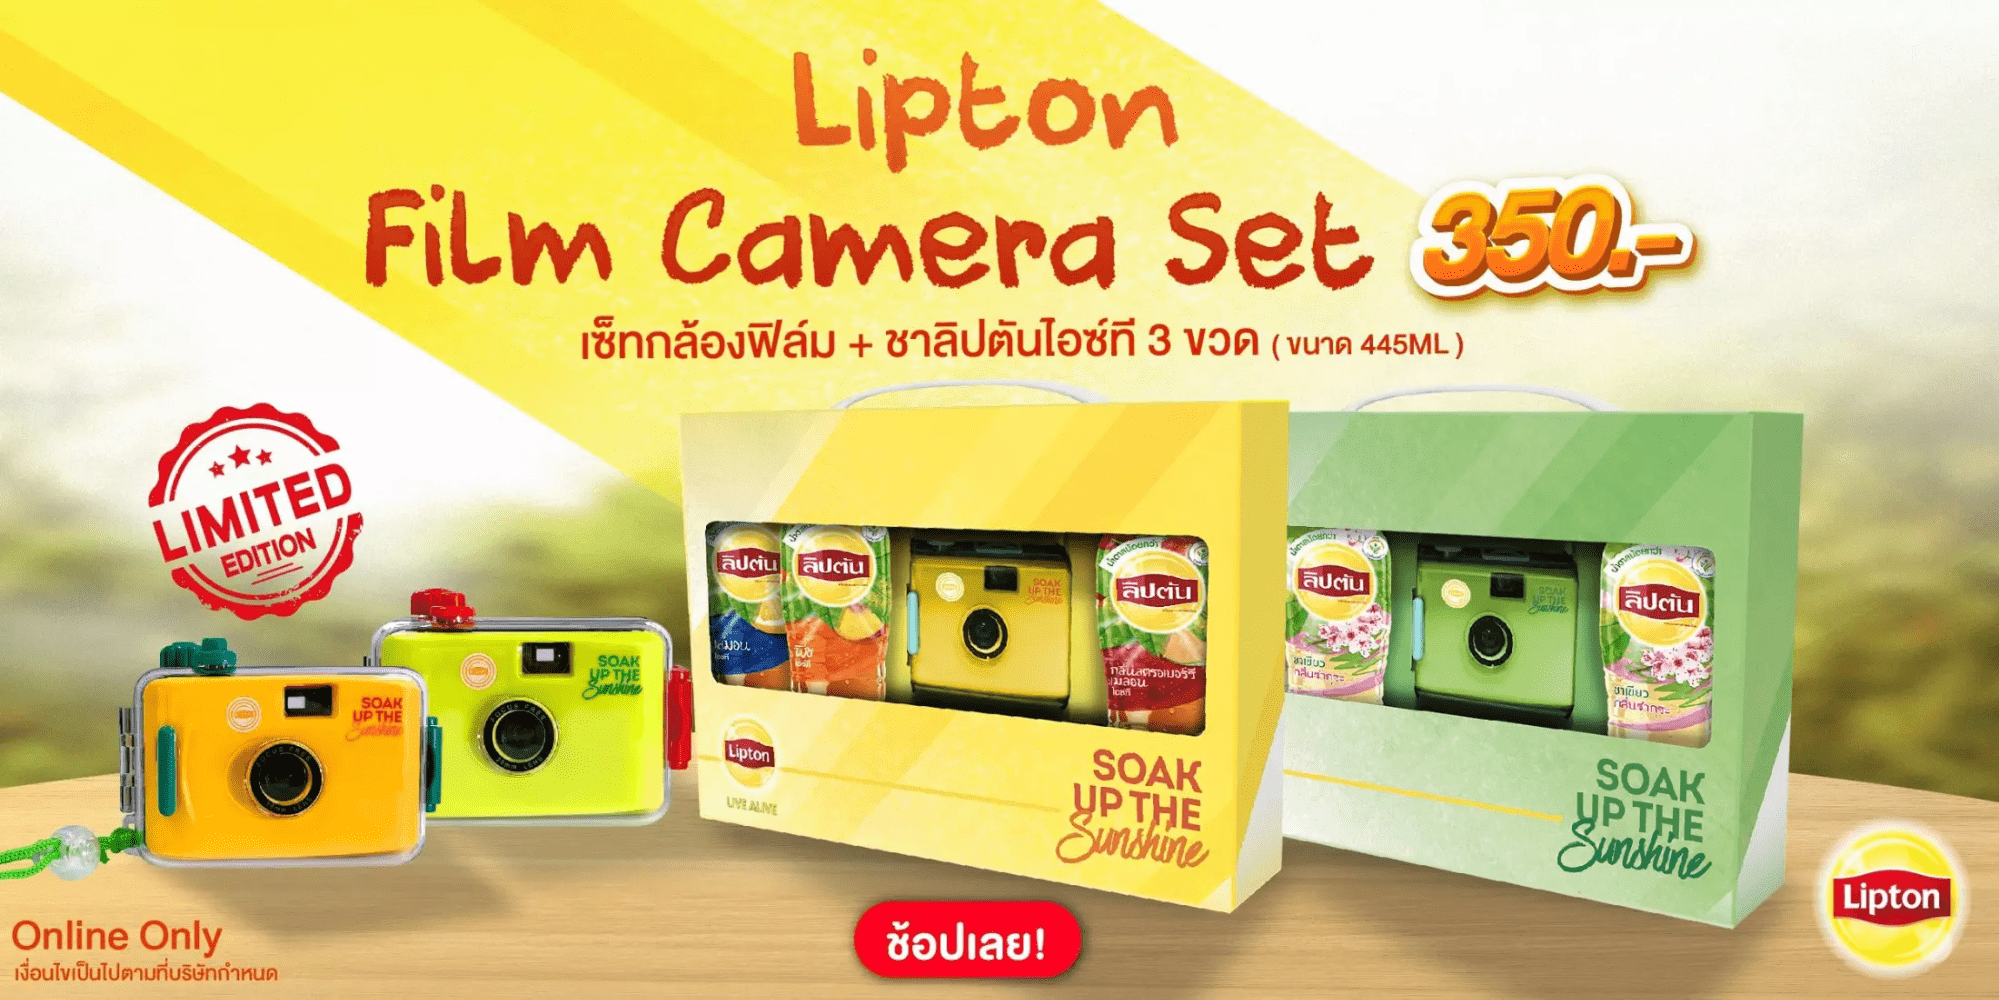 Lipton film camera